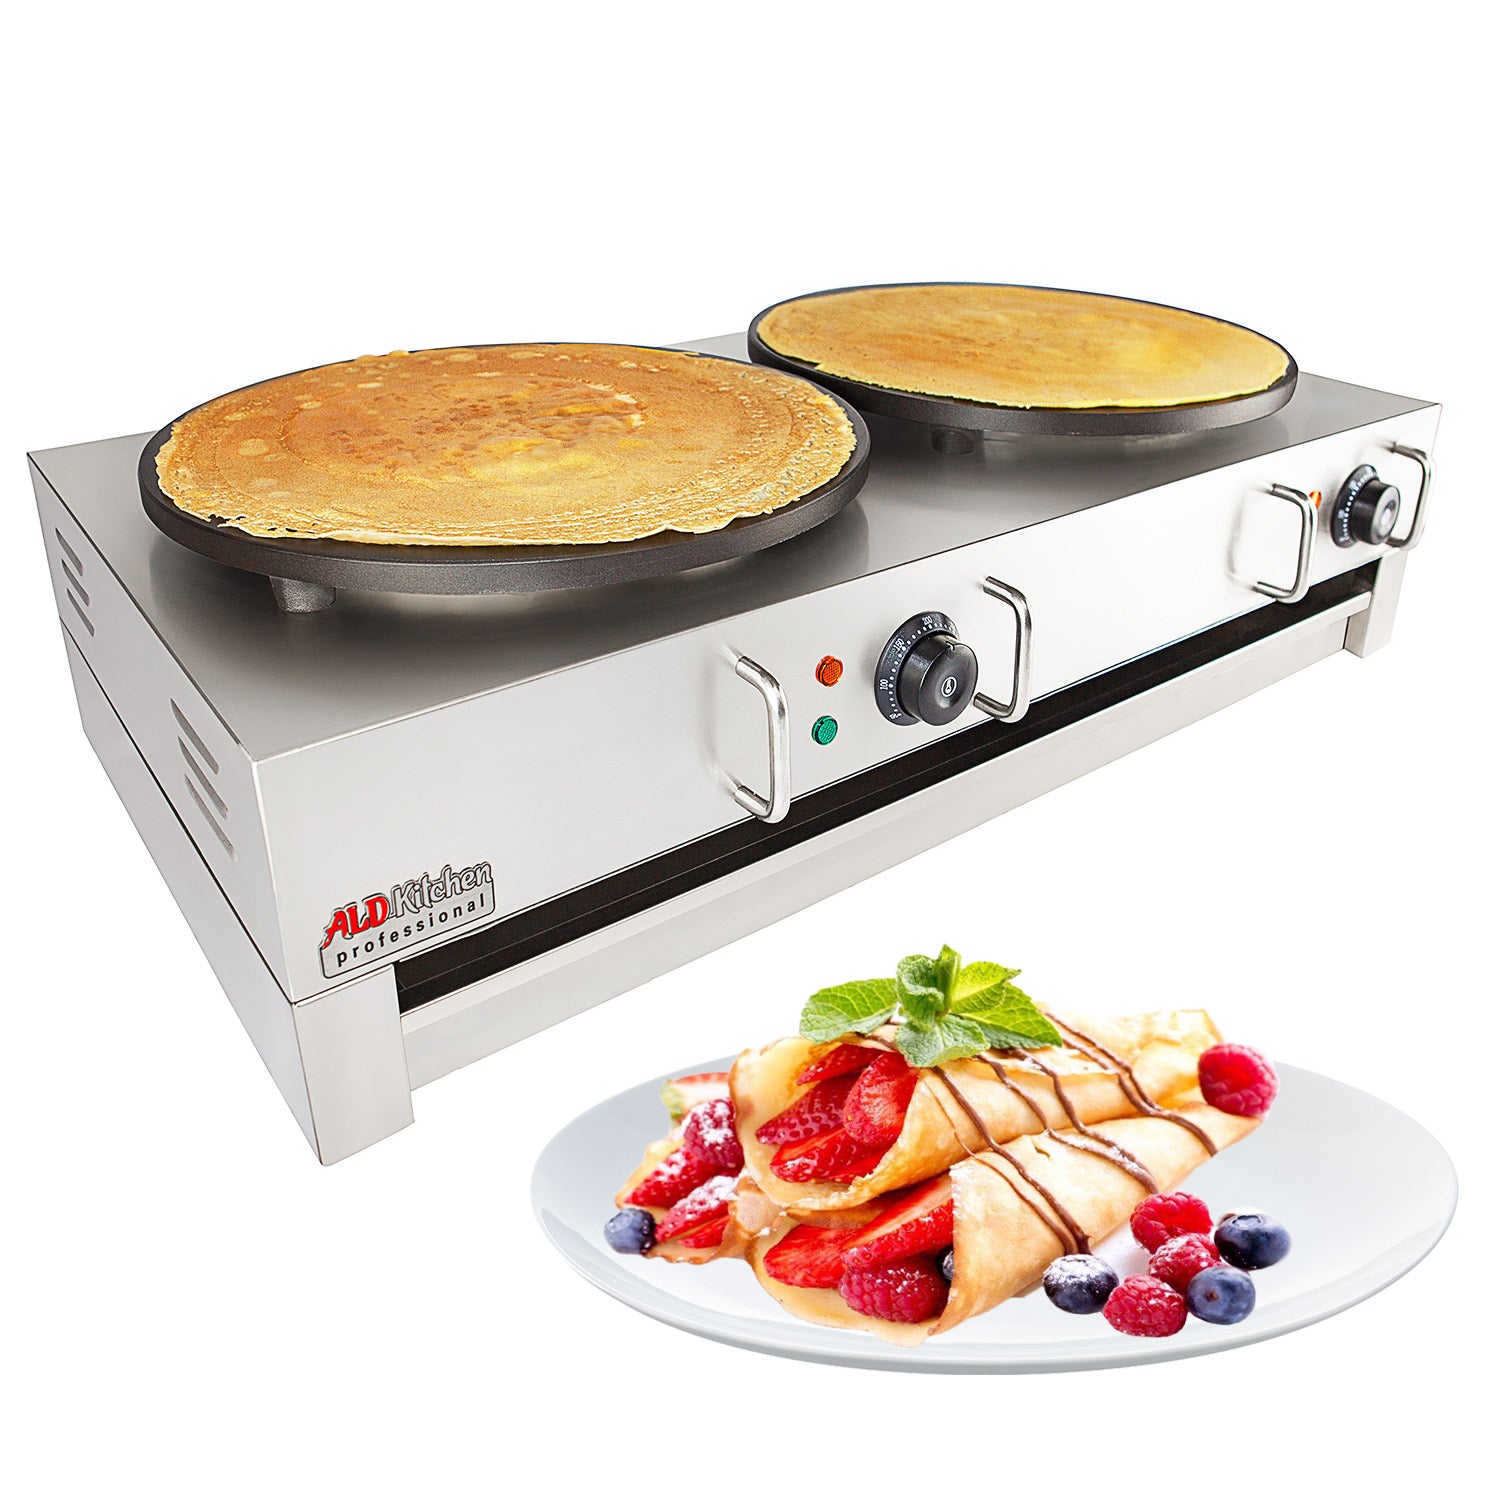 DUAL 16  40 cm Non-Stick TEFLON COATED DOUBLE COOKER Electric PROFESSIONAL Commercial Crepe Maker Pancake Griddle Machine